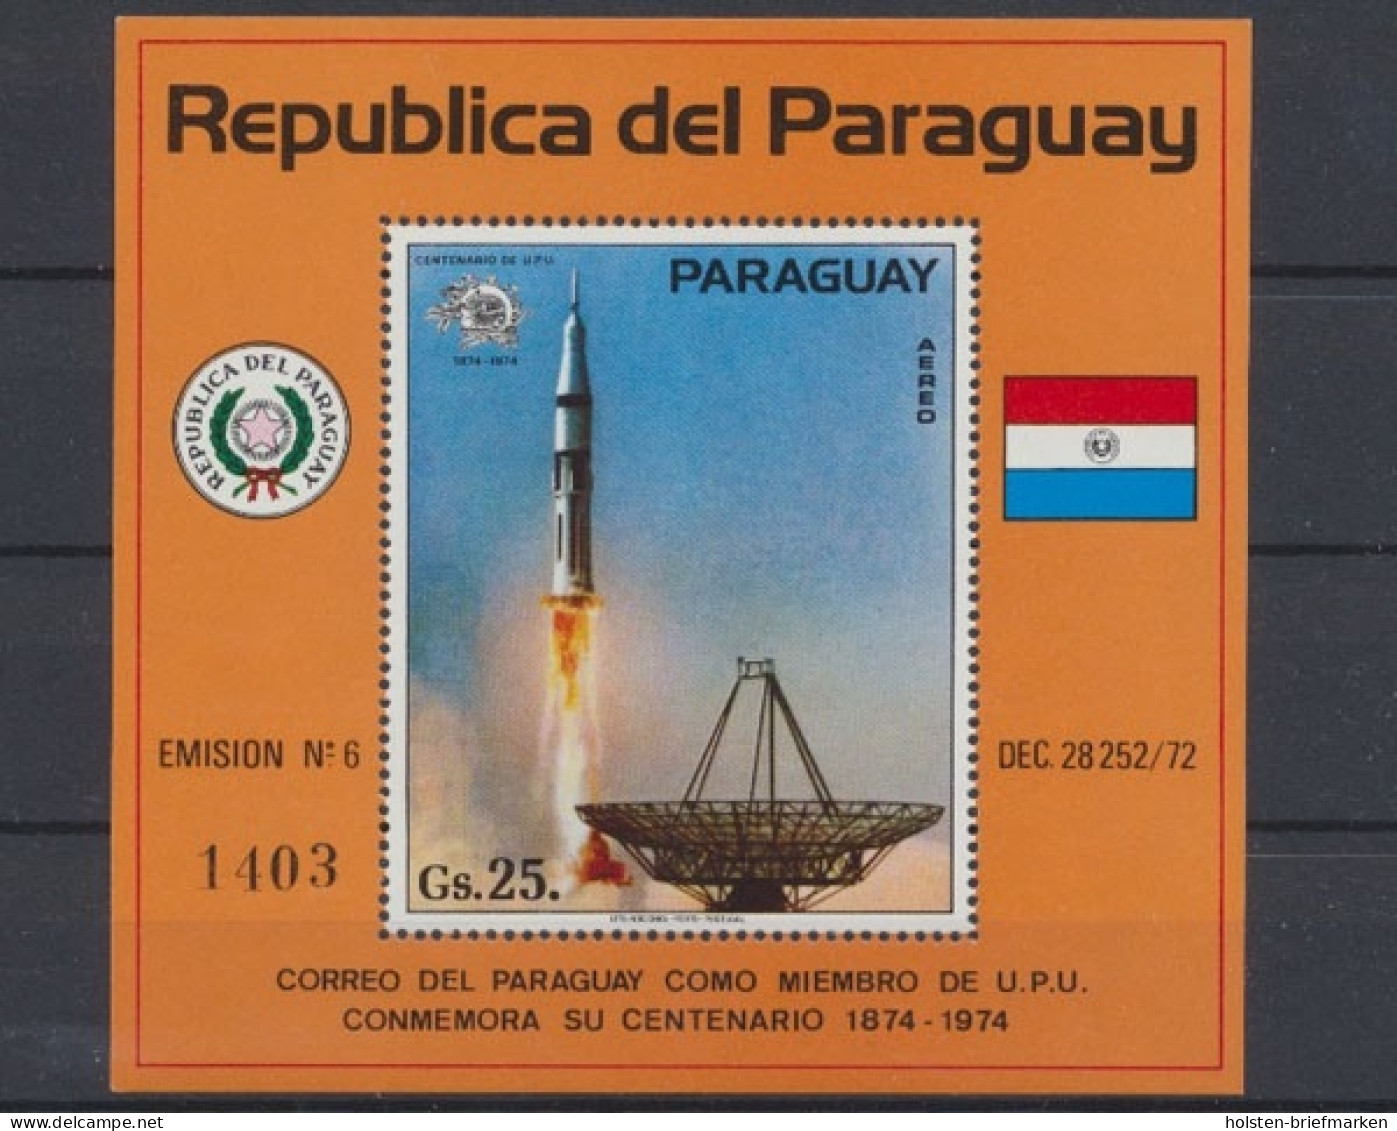 Paraguay, Michel Nr. Block 220, Postfrisch / MNH - Paraguay